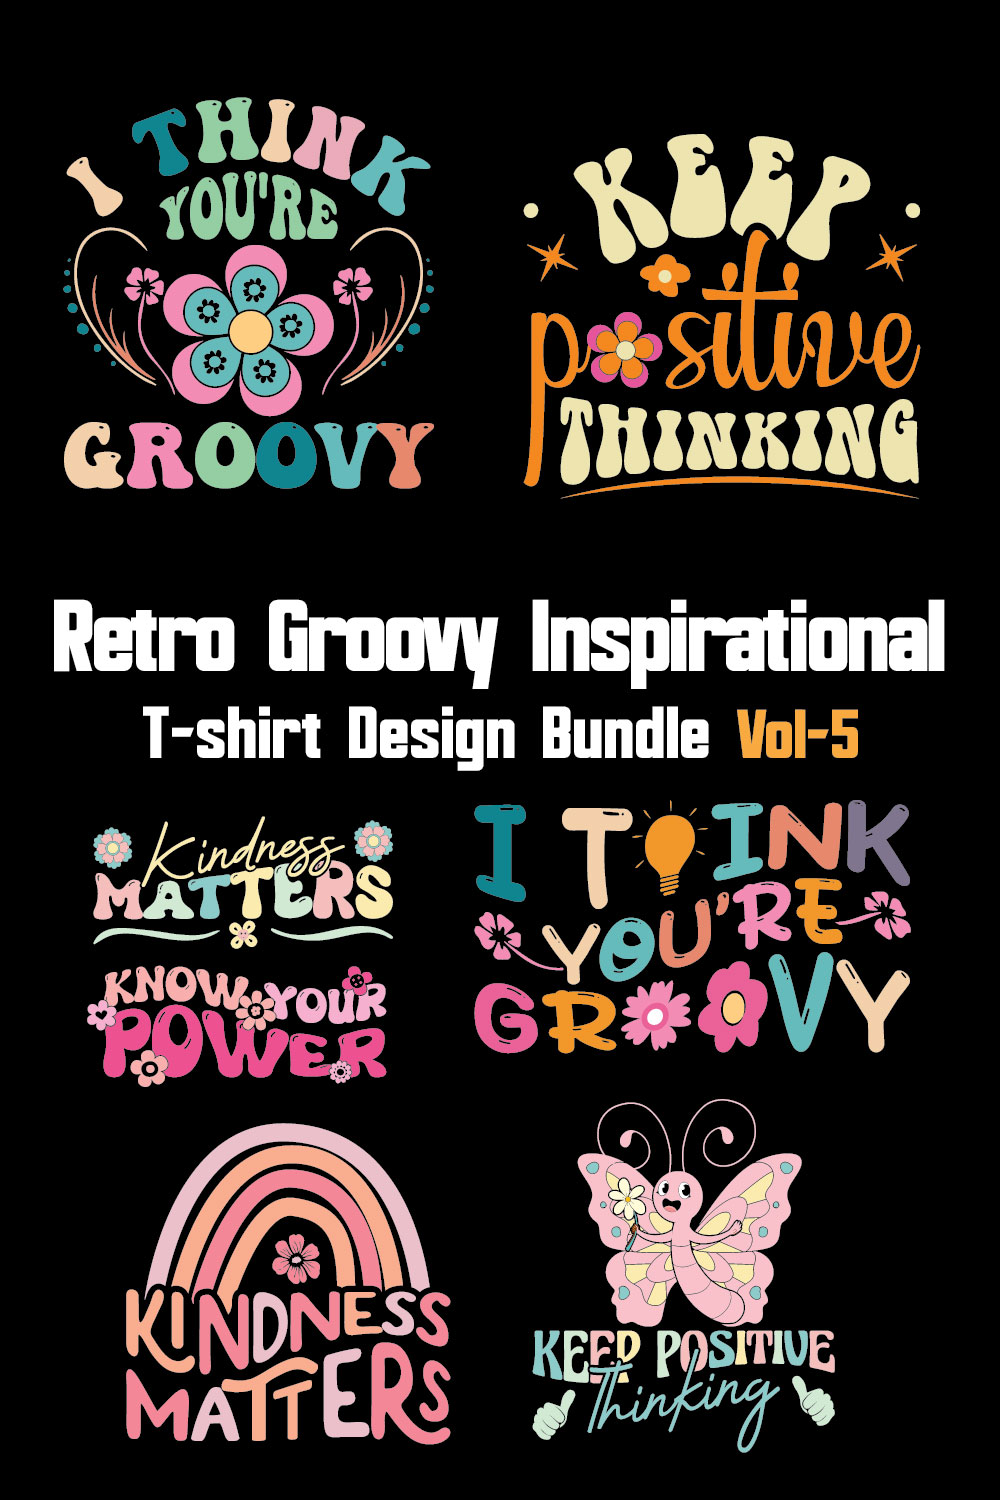 Retro Groovy Inspirational T-shirt Design Bundle Vol-5 pinterest preview image.